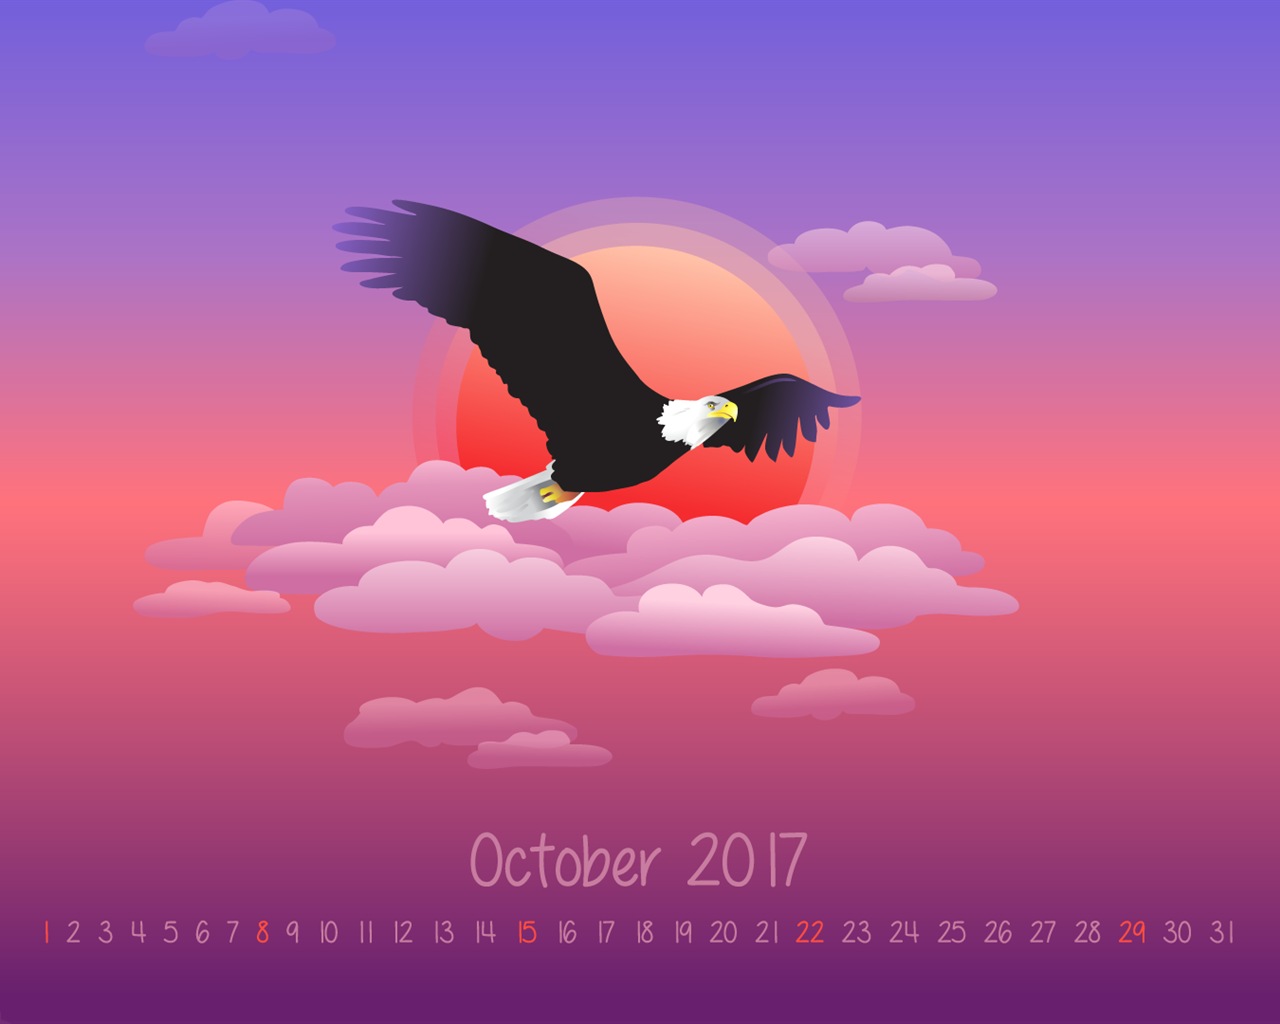 October 2017 calendar wallpaper #7 - 1280x1024